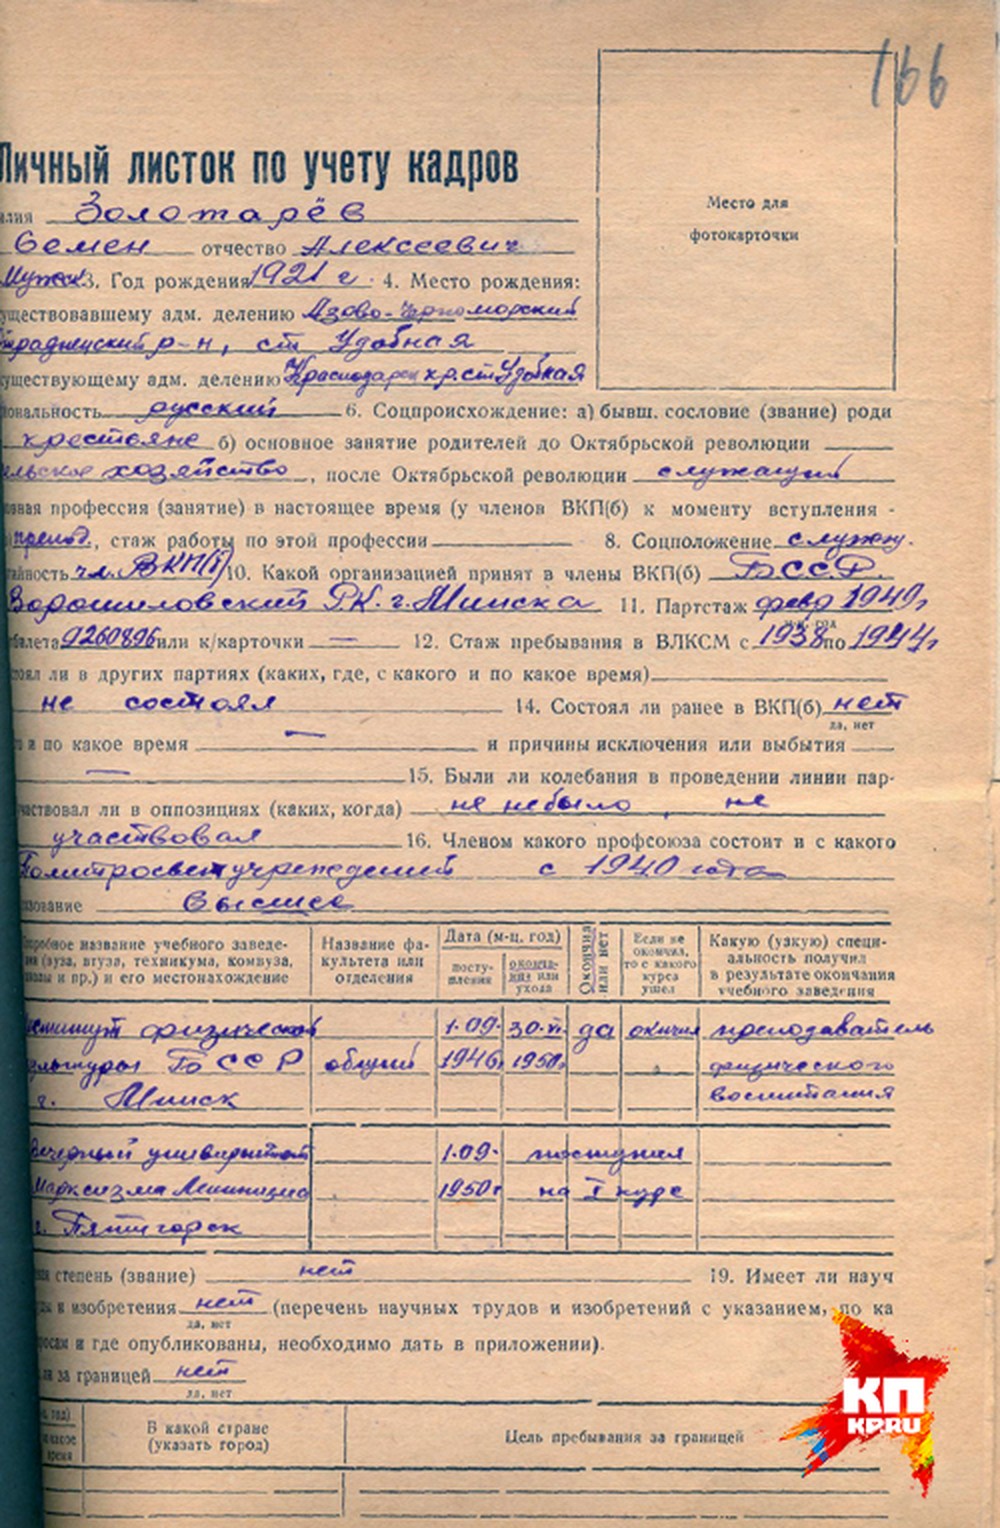 https://dyatlovpass.com/resources/340/gallery/Semyon-Zolotaryov-documents-103.jpg